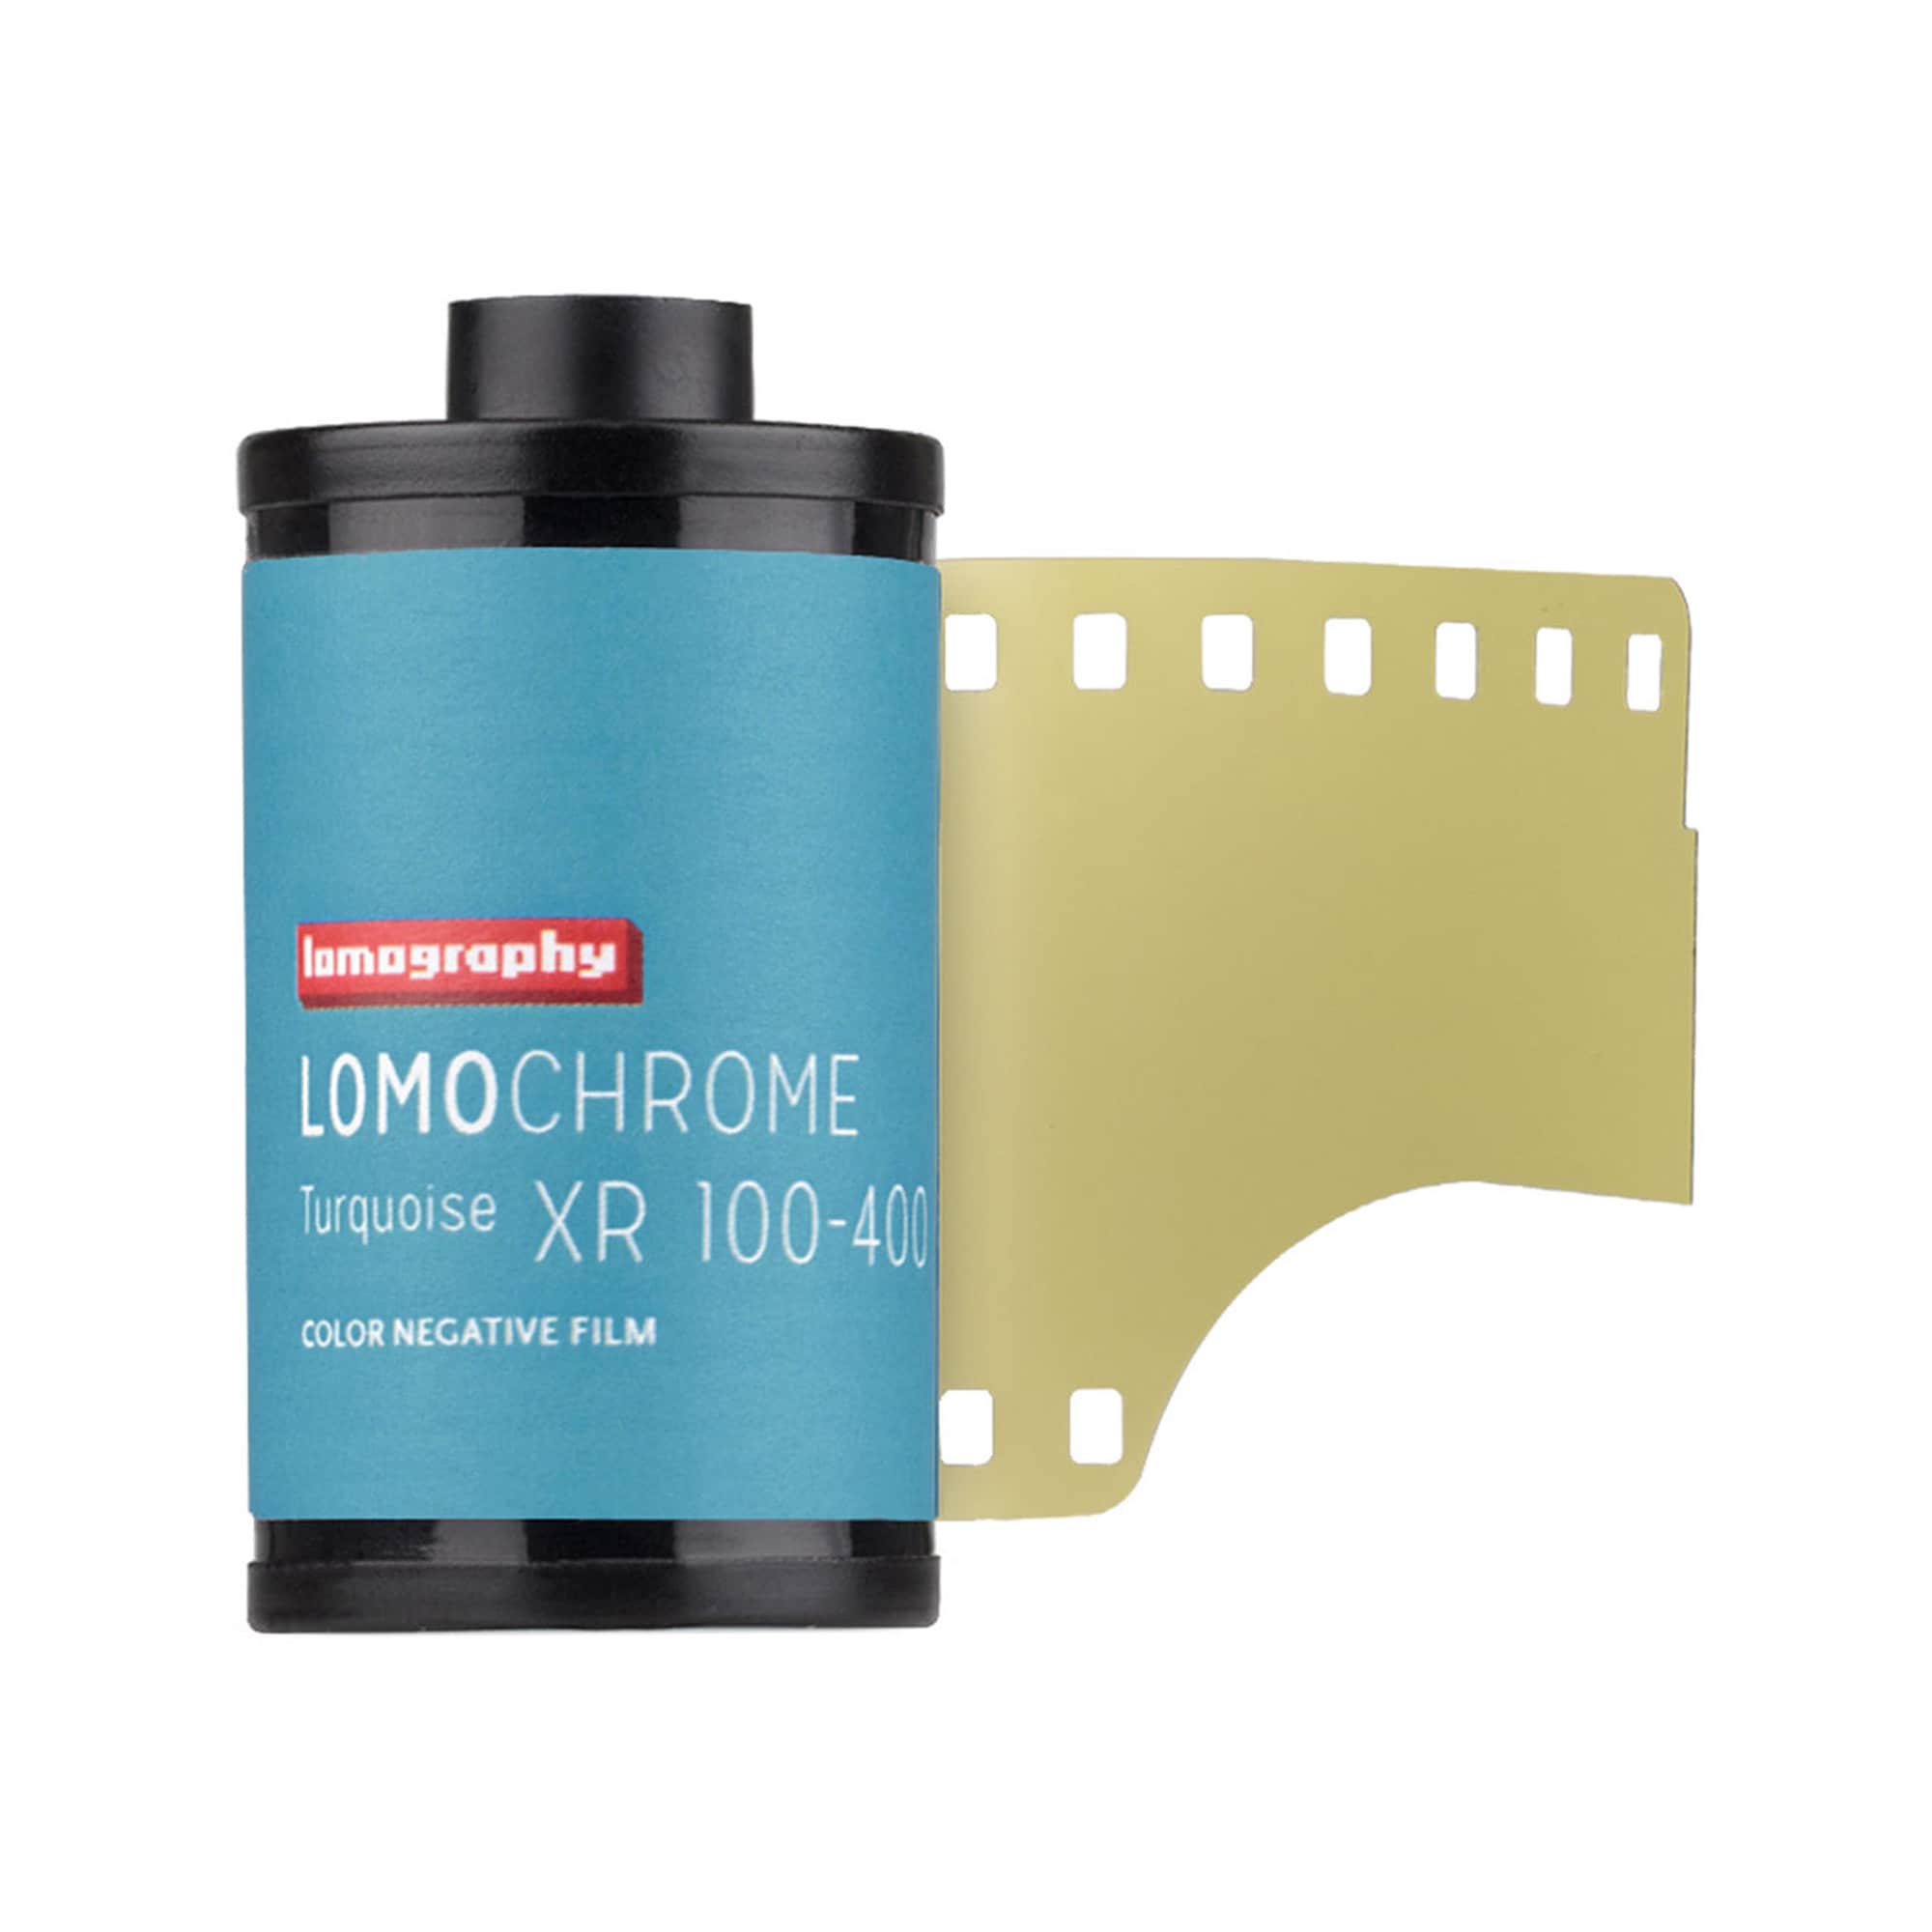 LomoChrome Turquoise XR 100-400 135/36